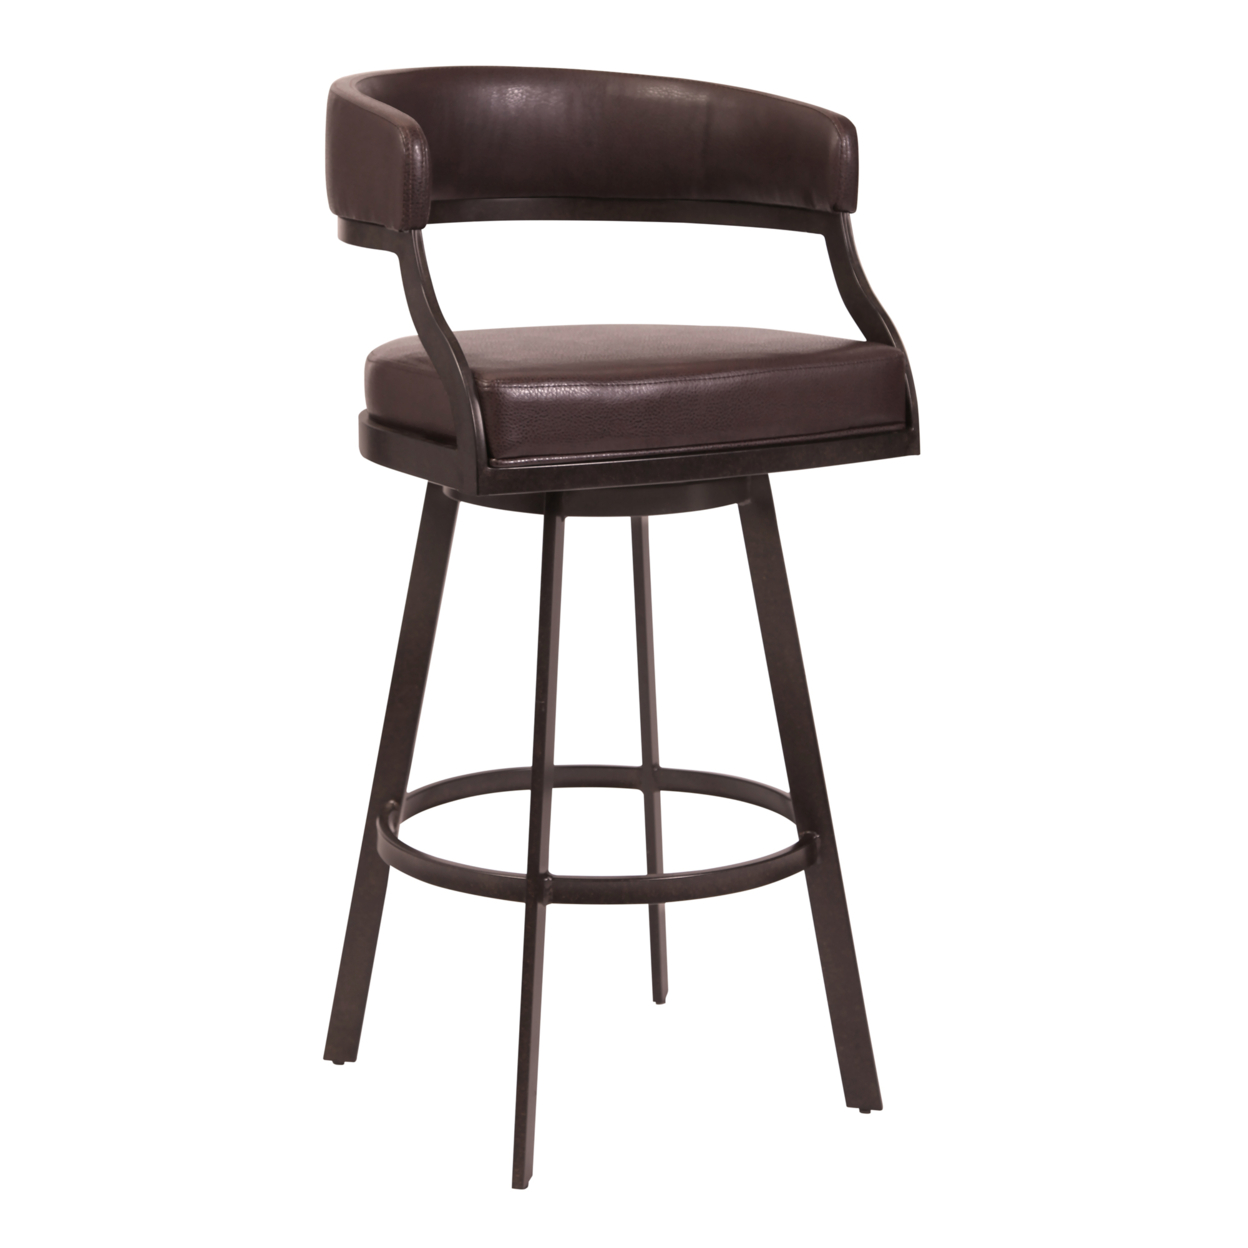 Ava 30 Inch Swivel Bar Stool Chair, Curved, Faux Leather, Auburn Brown- Saltoro Sherpi